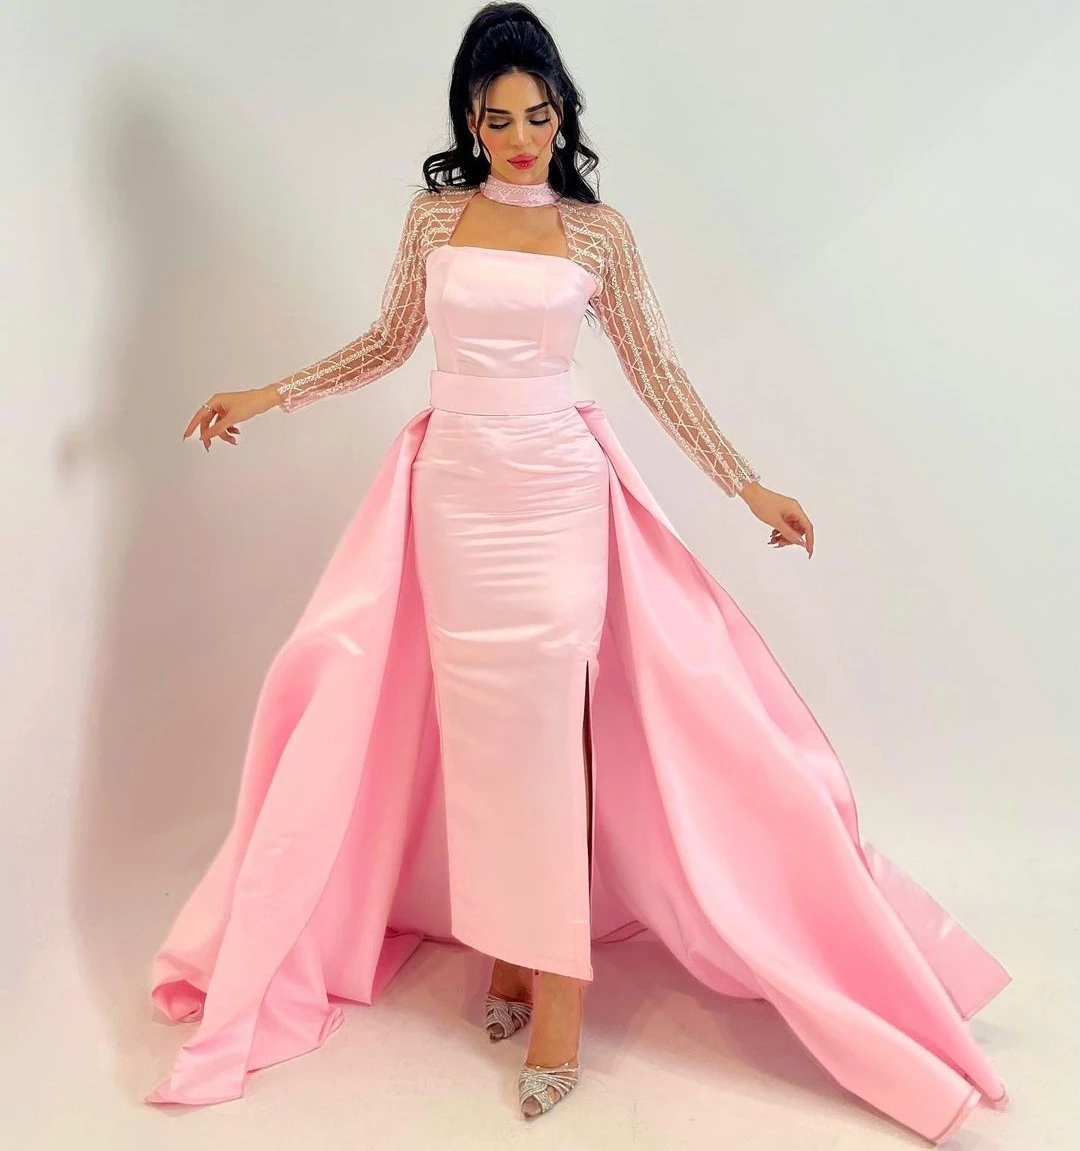 

VD Pink Ankle Length Sheath Prom Dresses Halter Square Neck Beaded Long Sleeves Evening Dress Detachable Train Vestidos De Noche